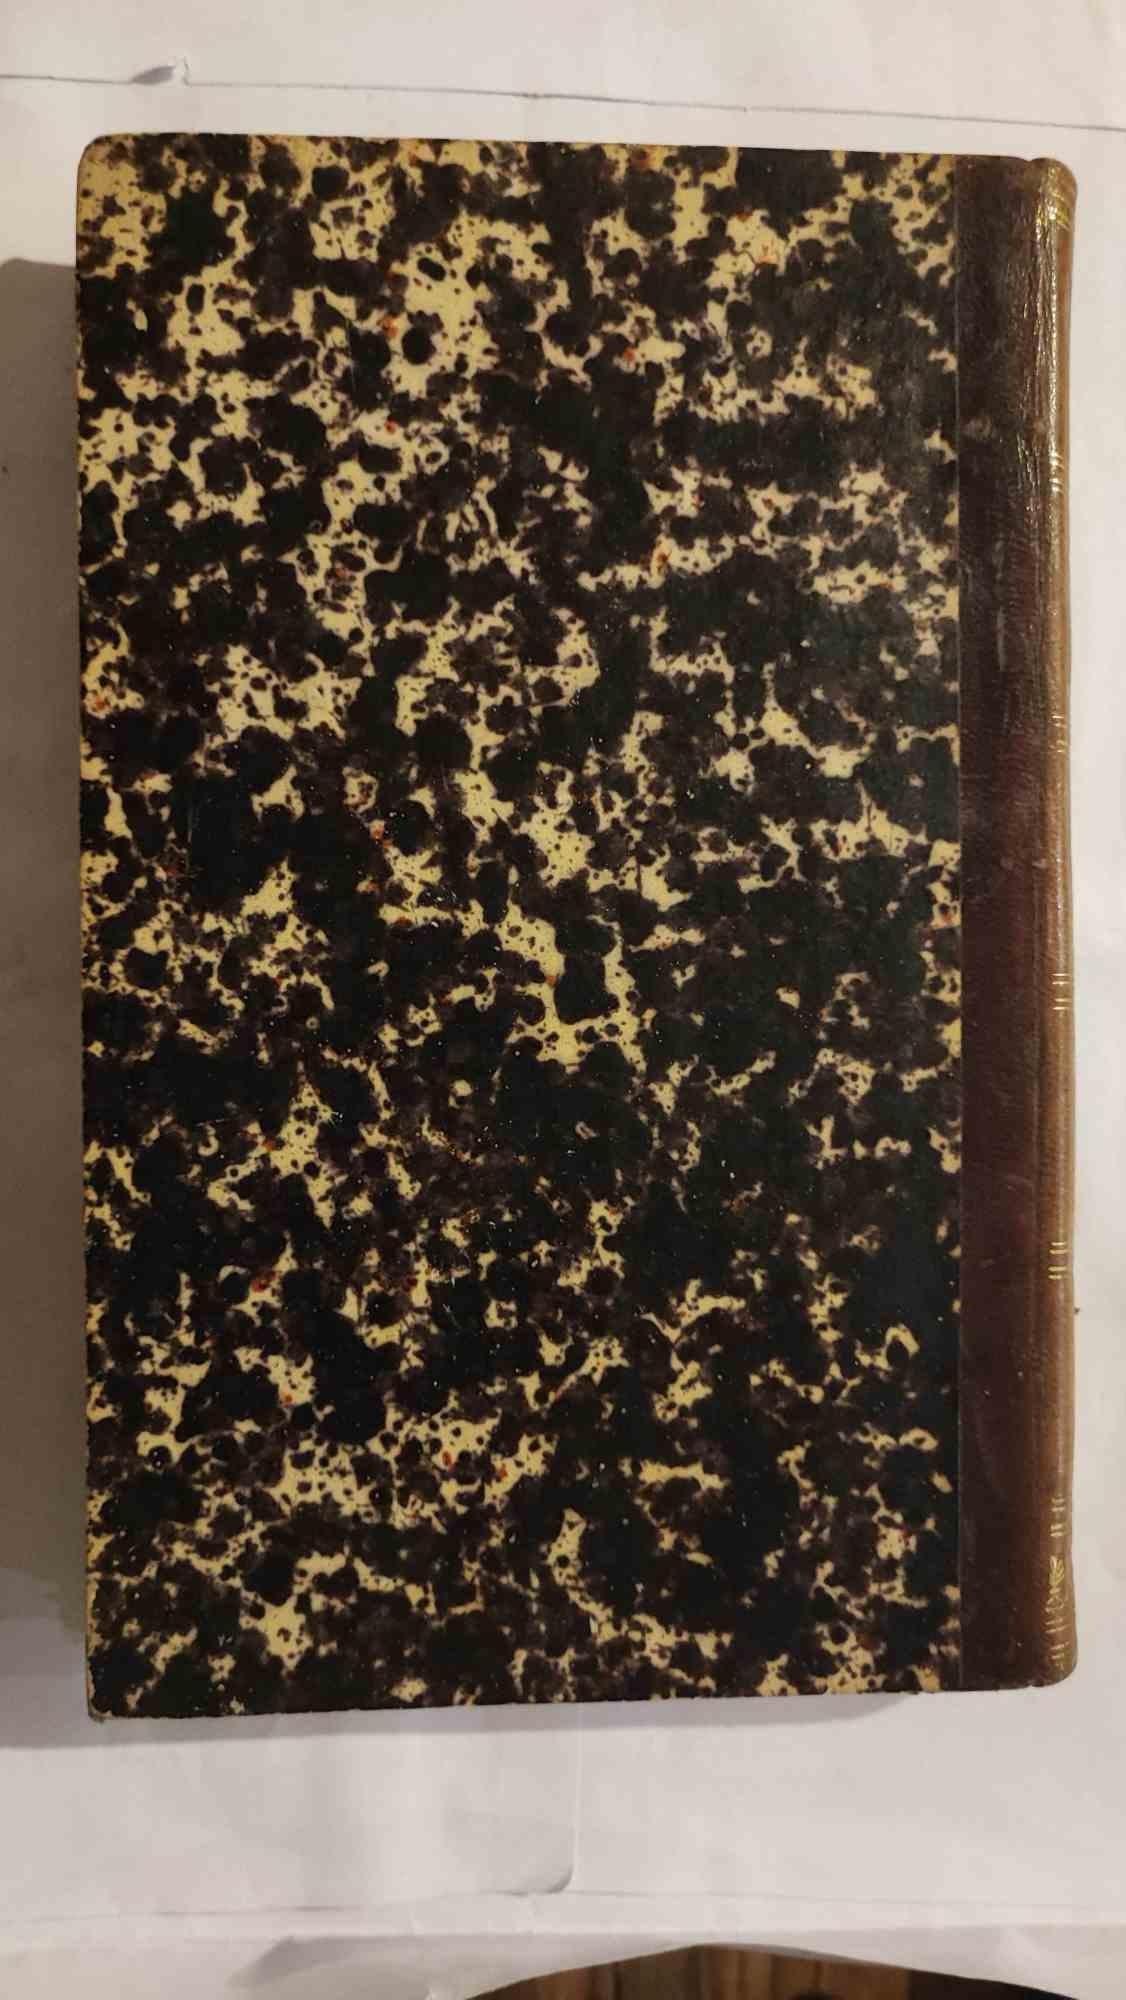 Les Misérables - Rare Book by Victor Hugo - 1862 For Sale 5